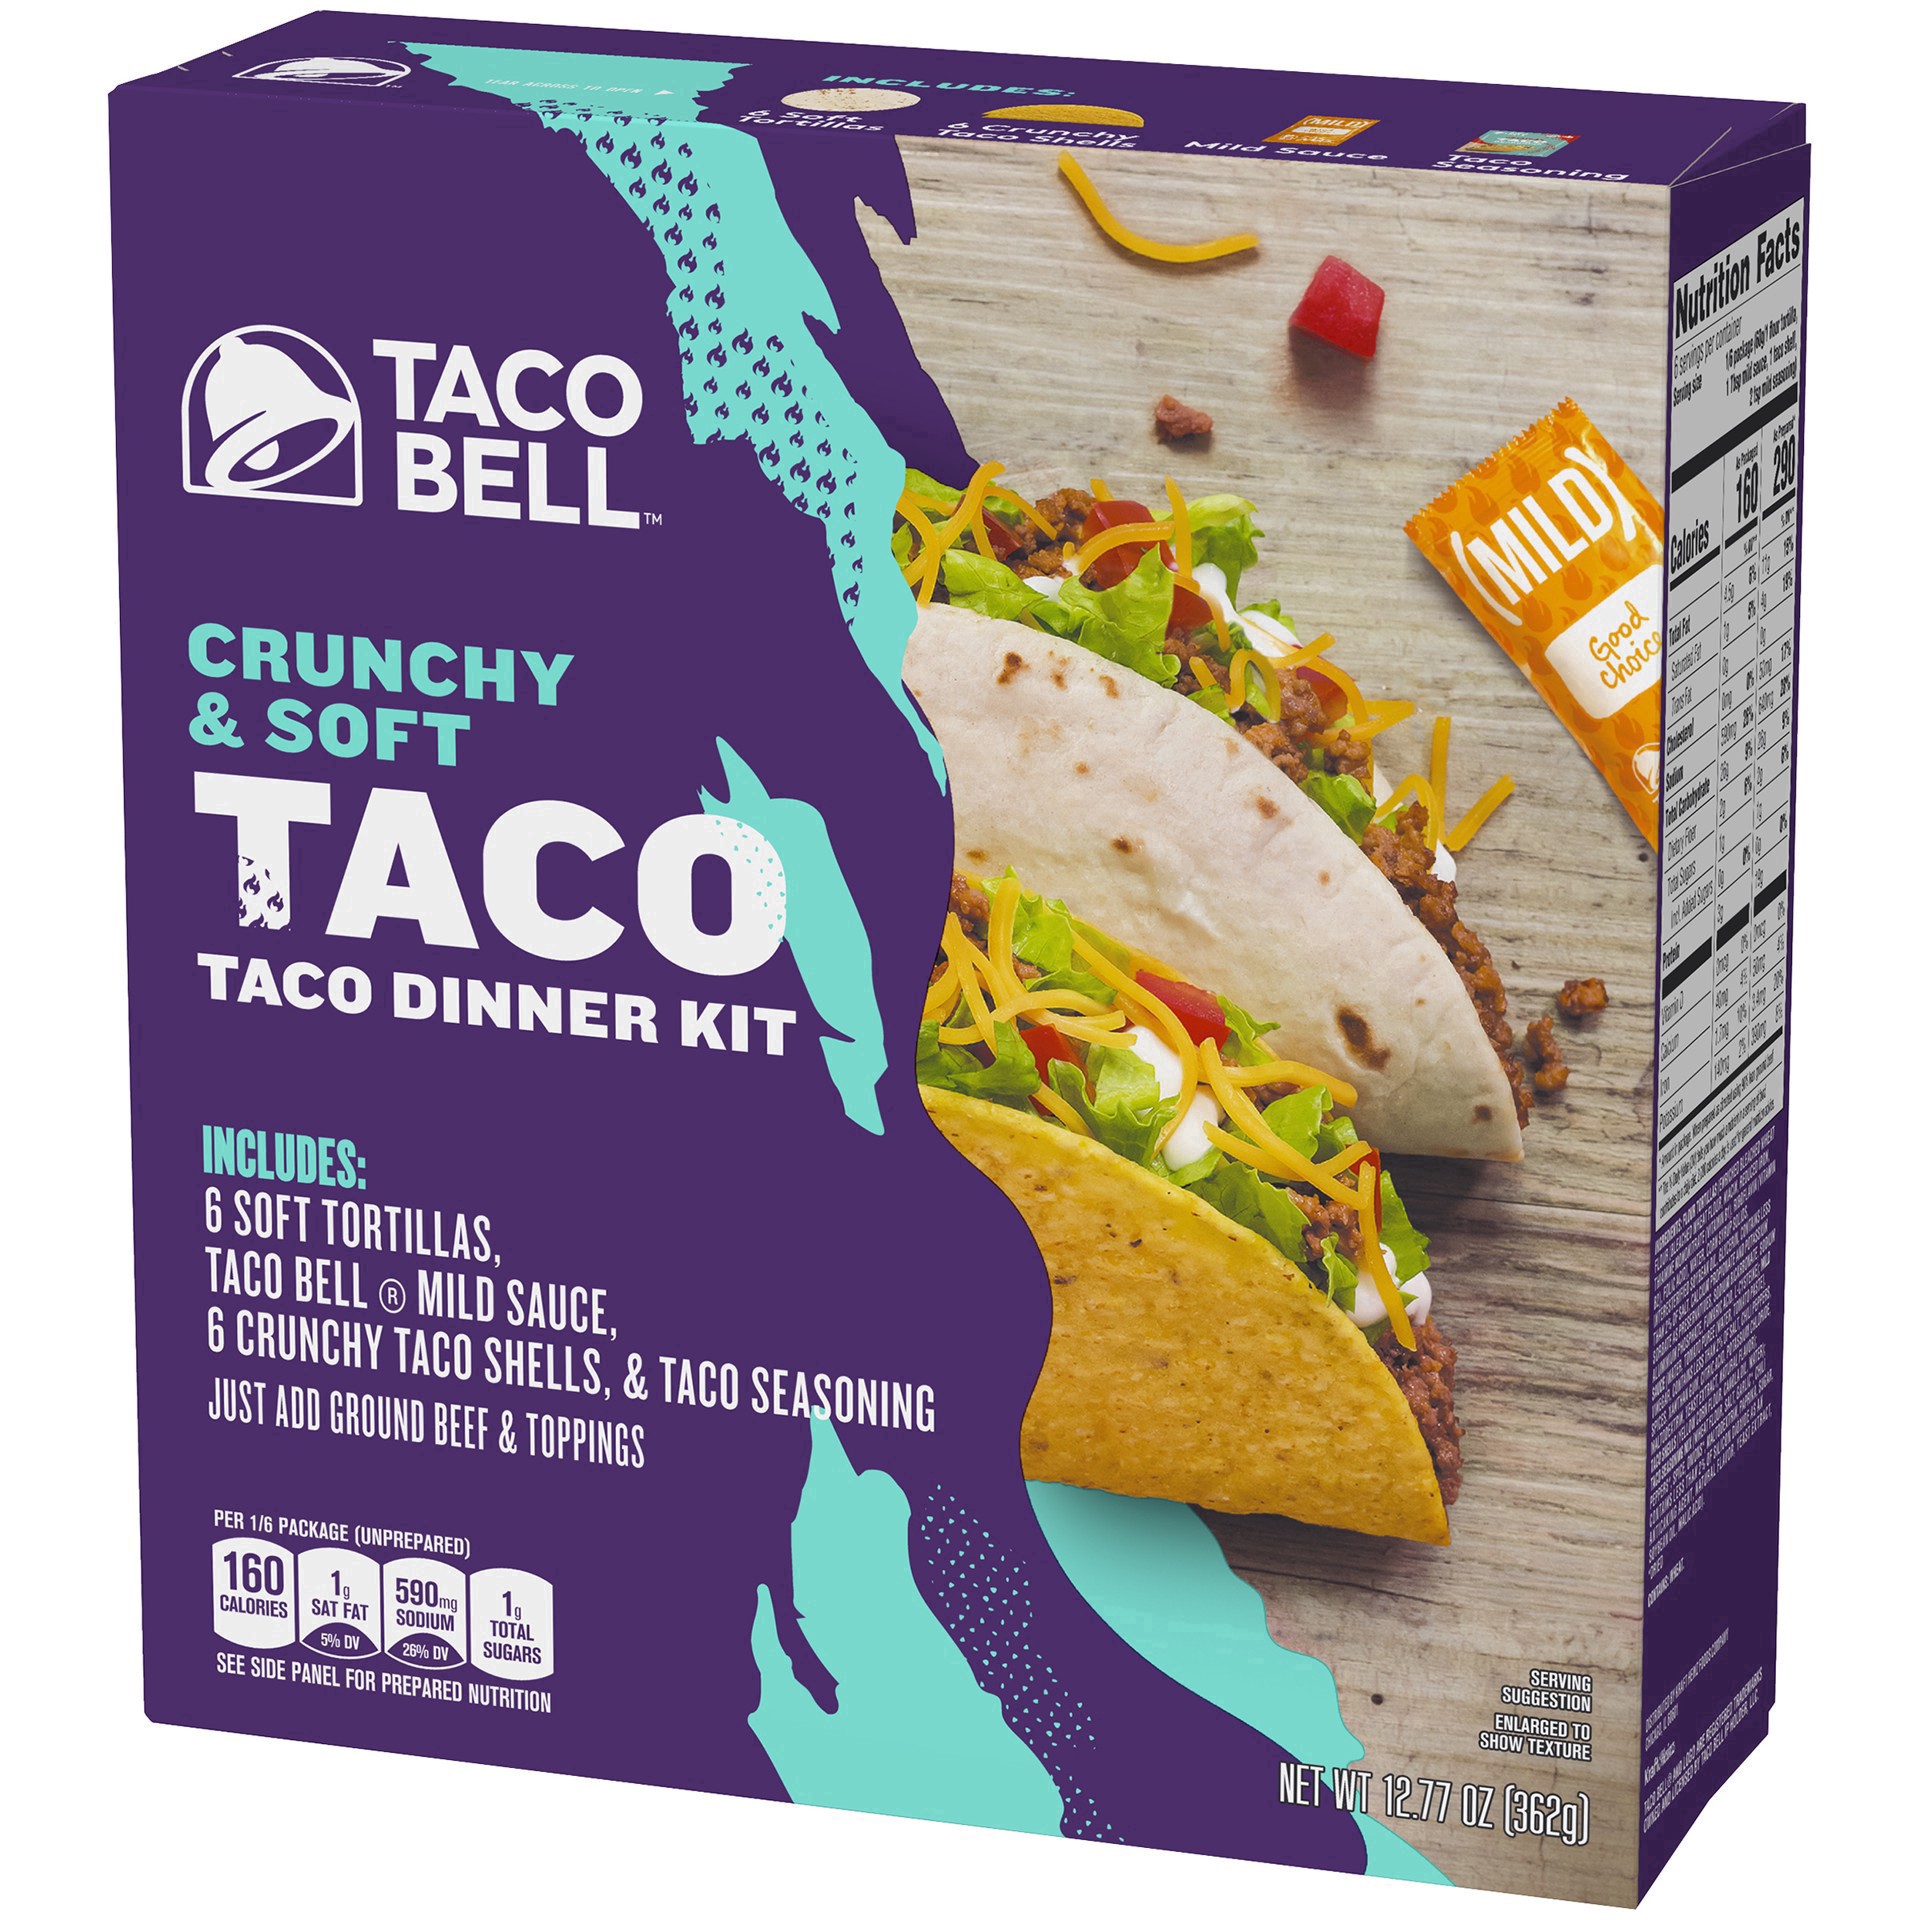 slide 24 of 101, Taco Bell Crunchy & Soft Taco Cravings Kit with 6 Soft Tortillas, 6 Crunchy Taco Shells, Taco Bell Mild Sauce & Seasoning, 12.77 oz Box, 1 ct